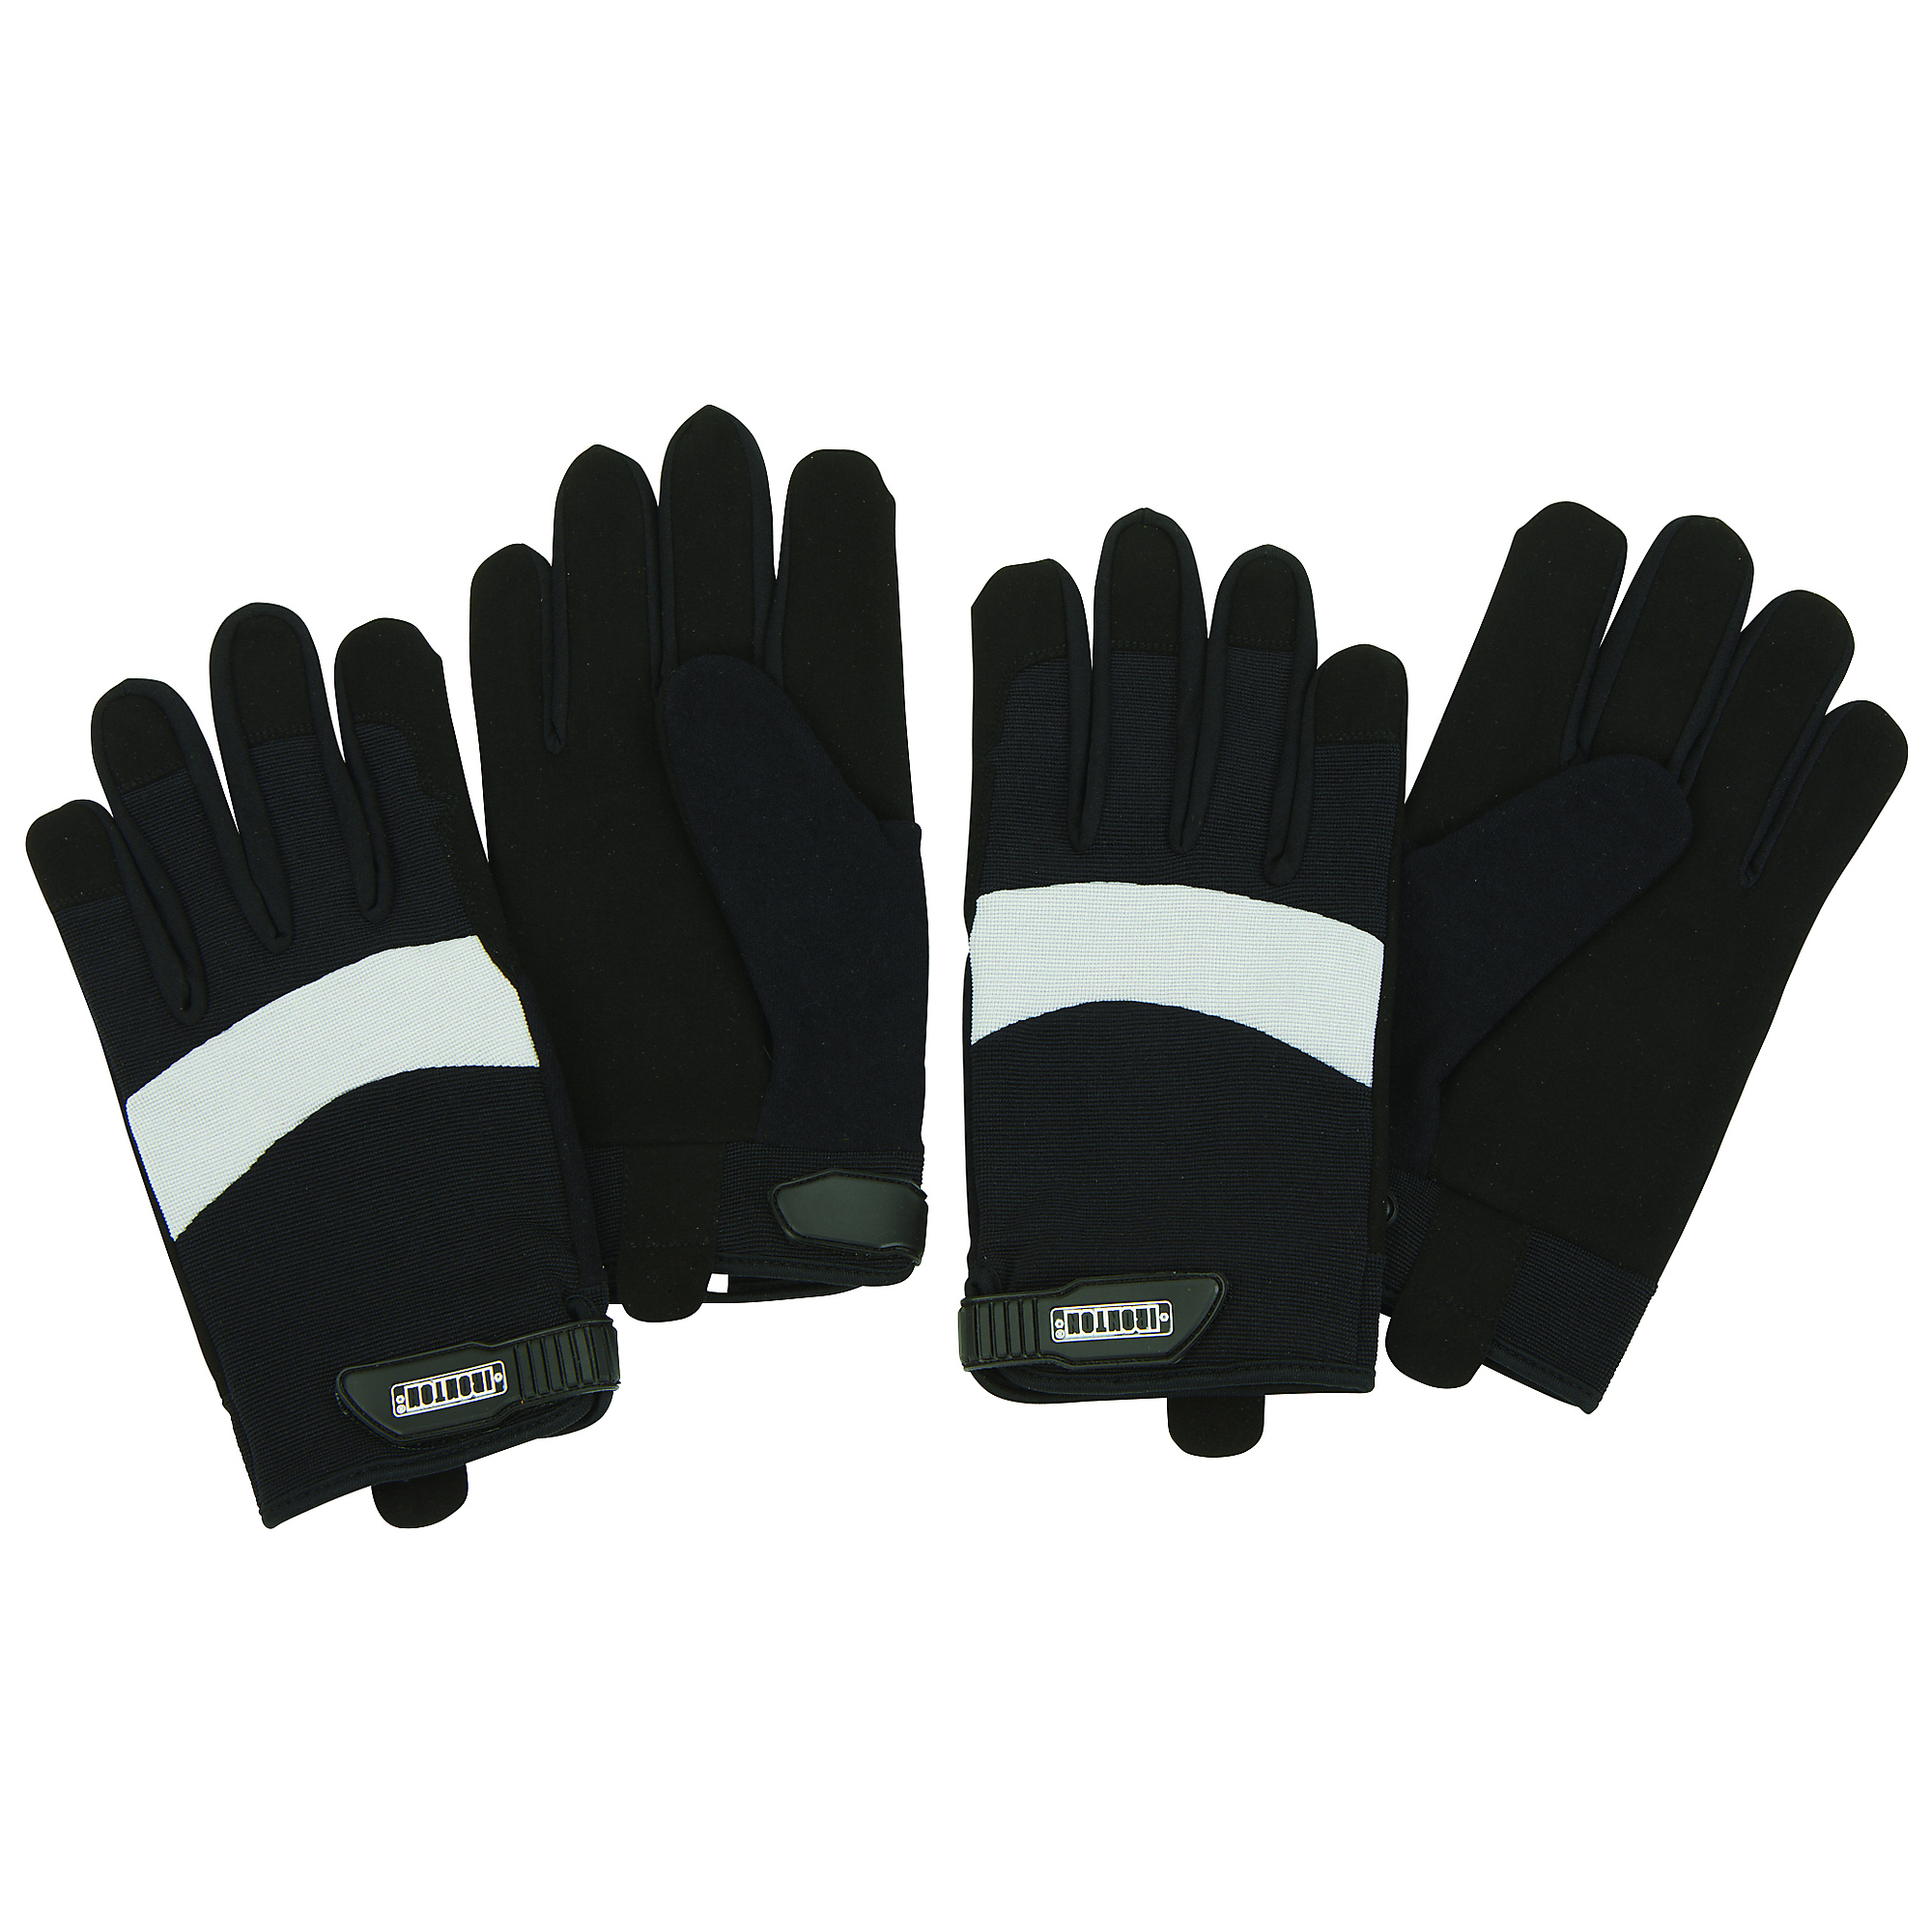 Ironton Men's High-Dexterity Gloves, 2 Pairs, Black/Gray, XL